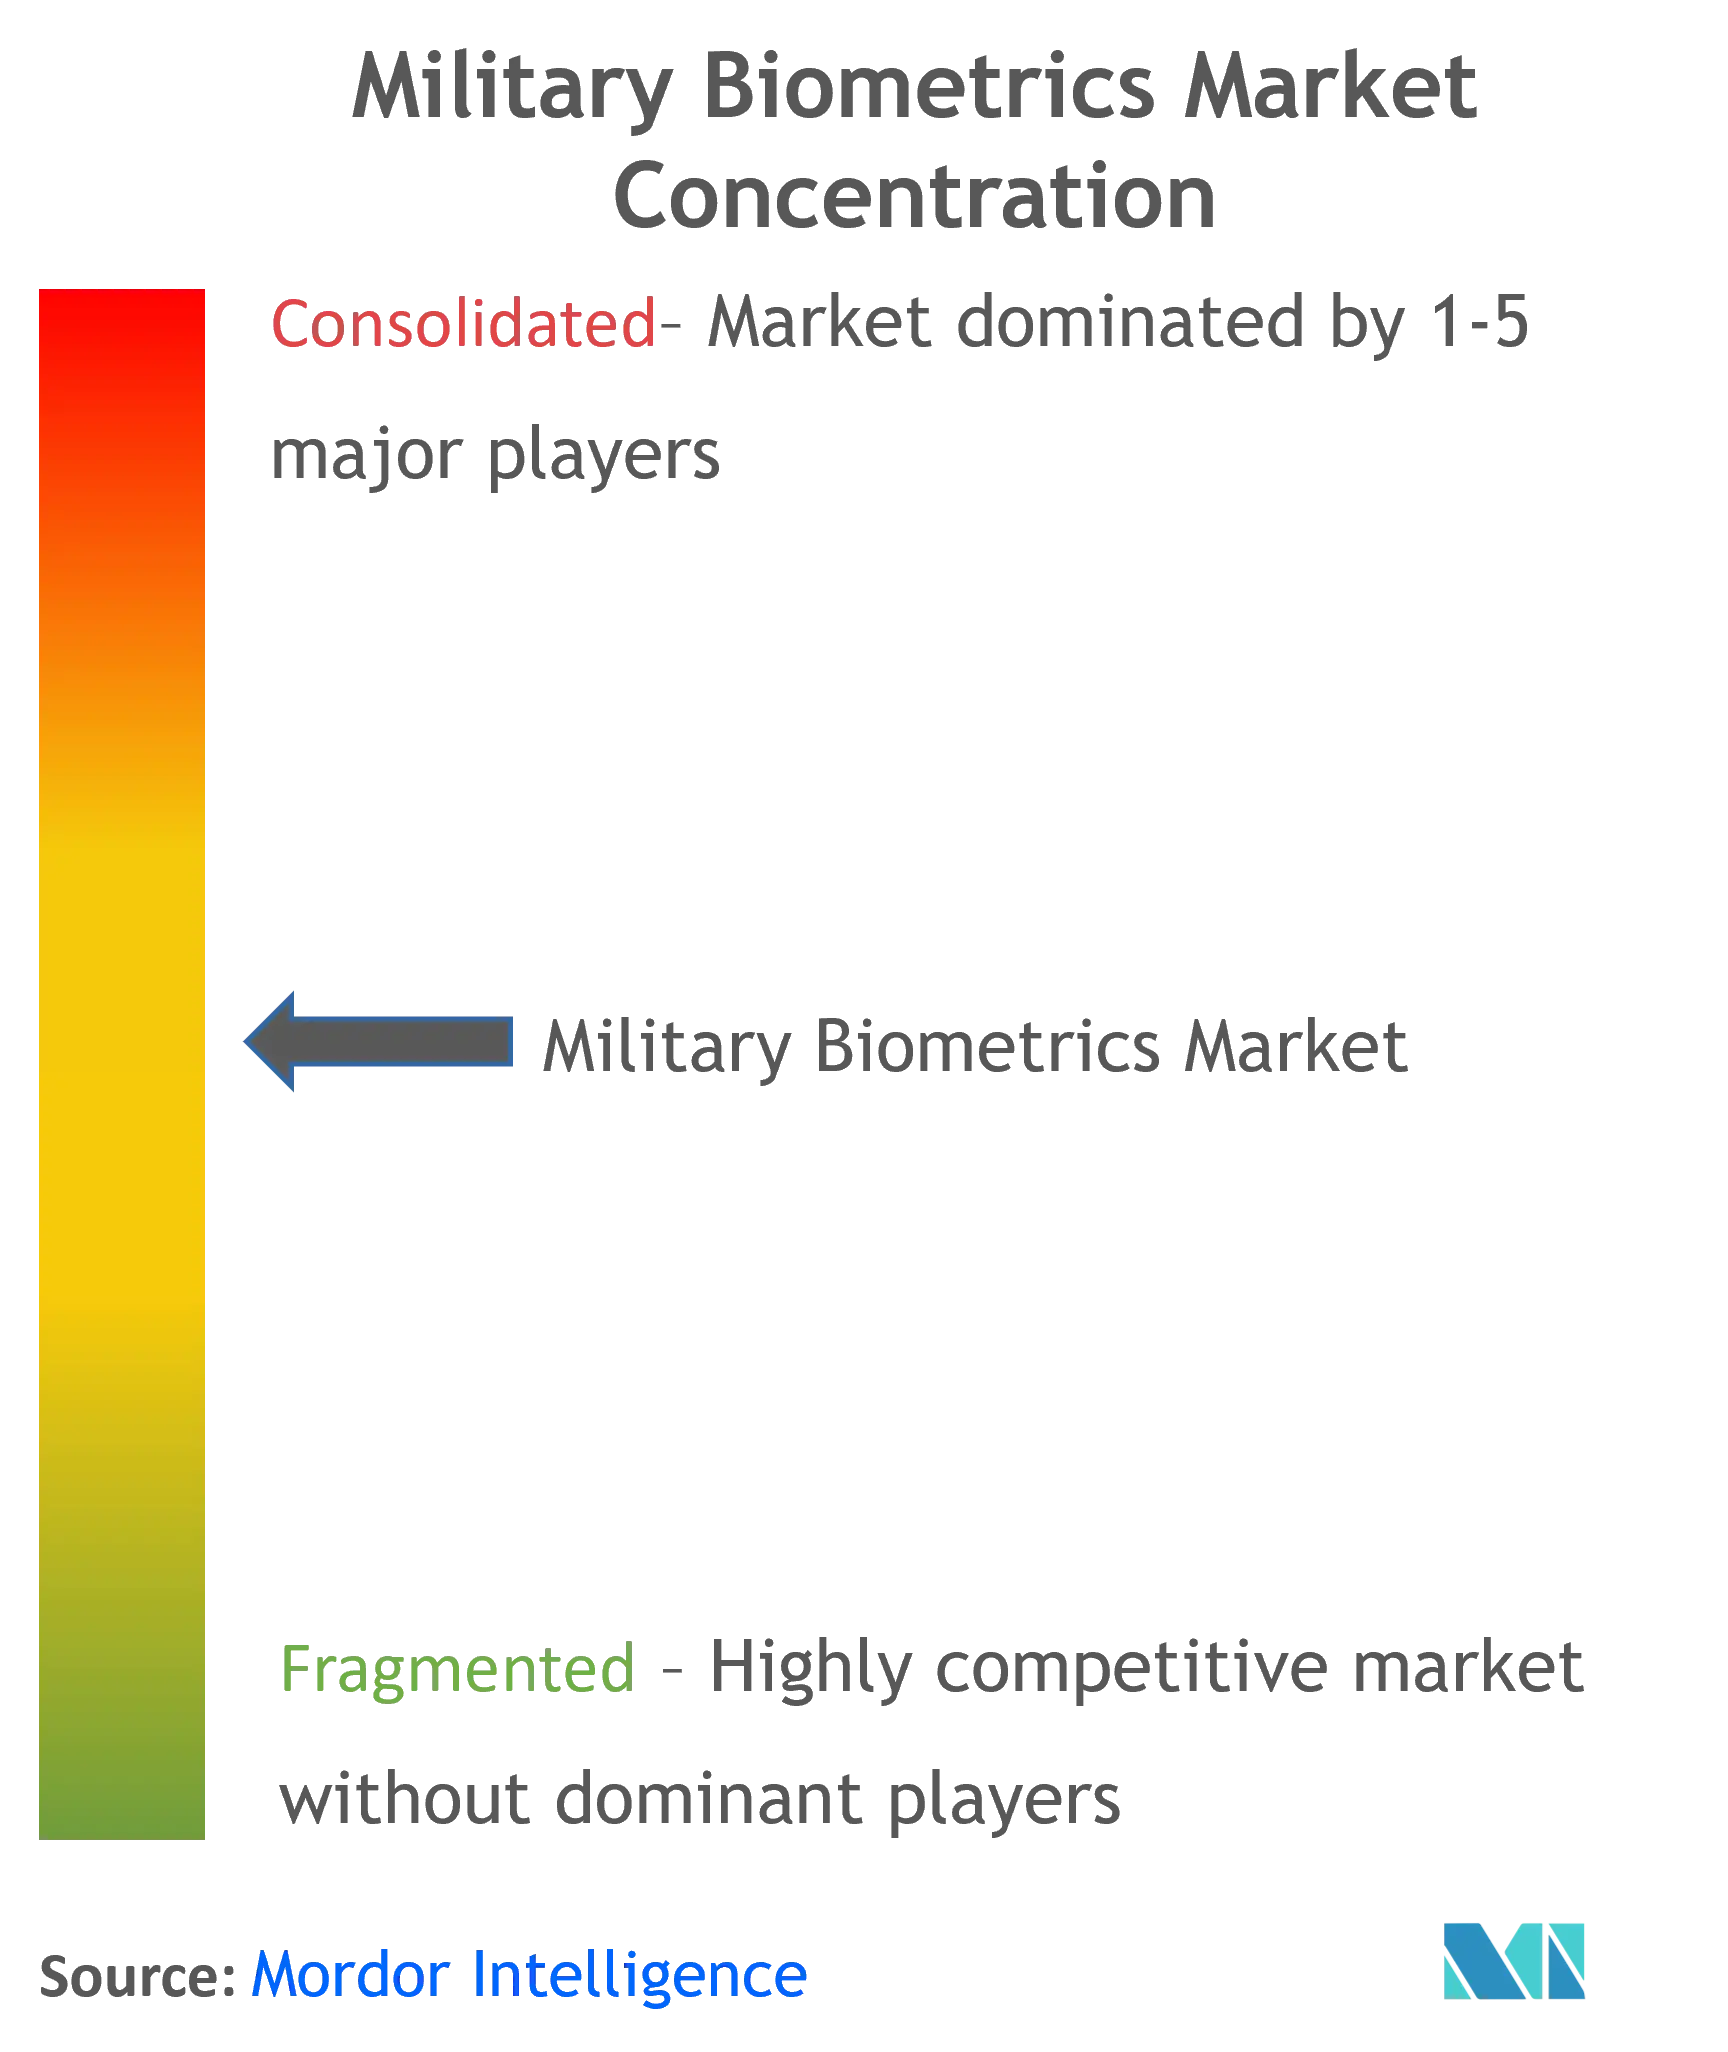 Military Biometrics Market Concentration